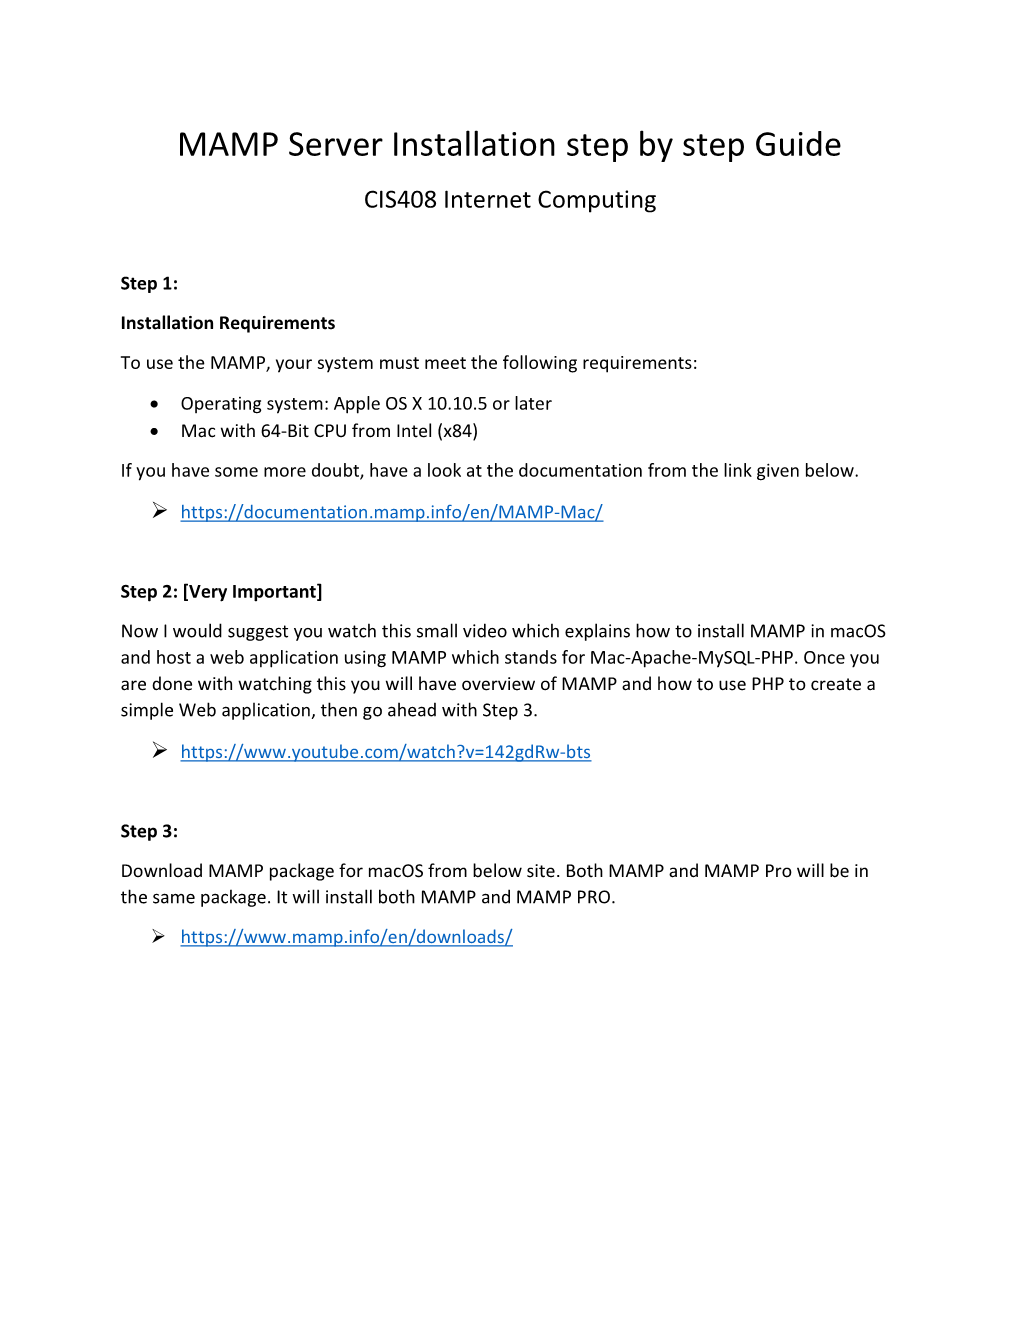 MAMP Server Installation Step by Step Guide CIS408 Internet Computing